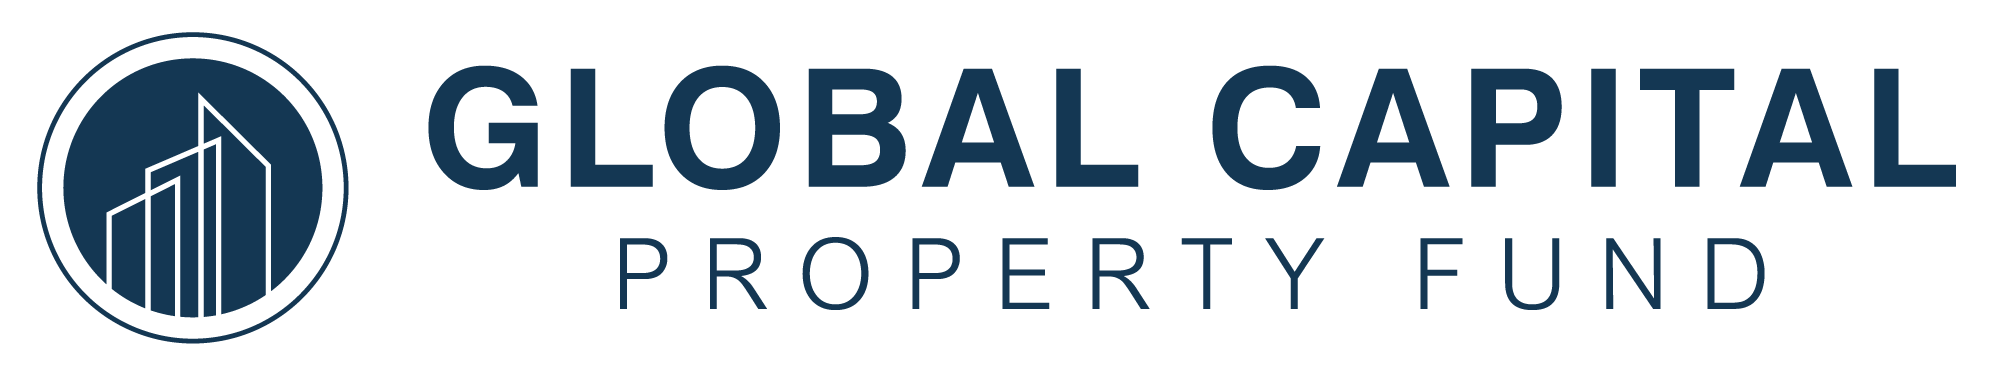 Global Capital Property Fund